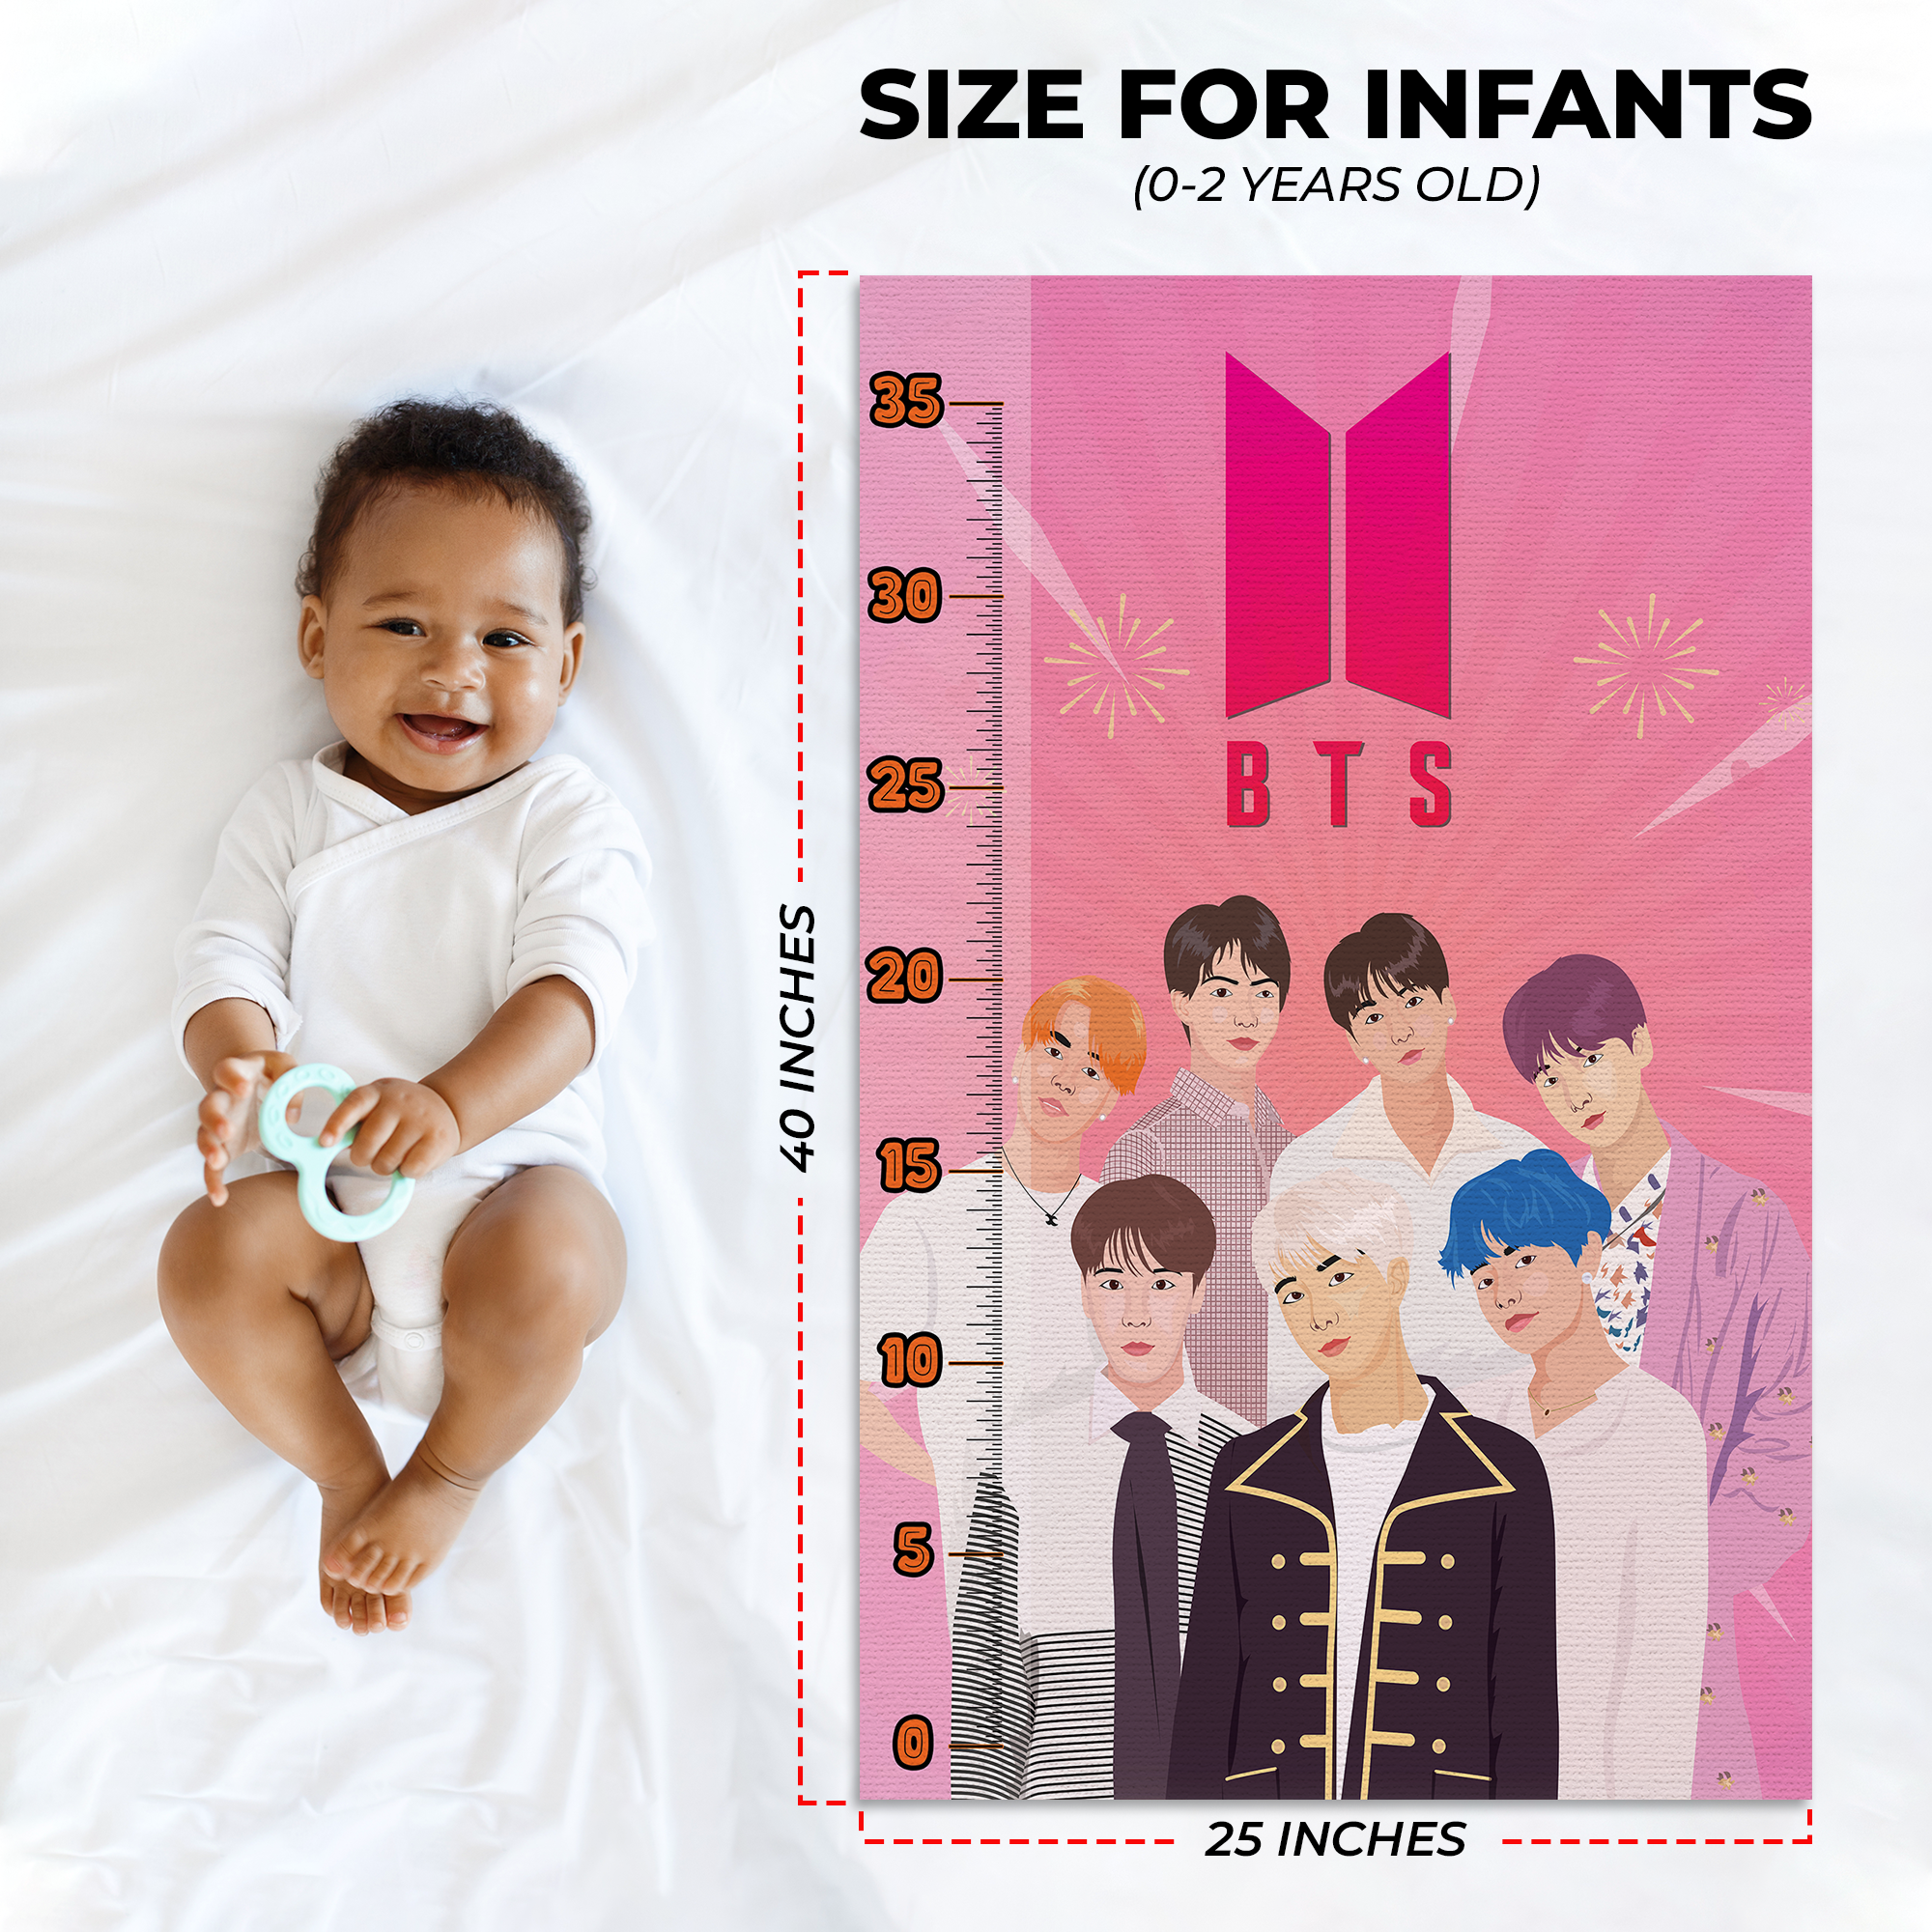 BTS Infant Growth Chart